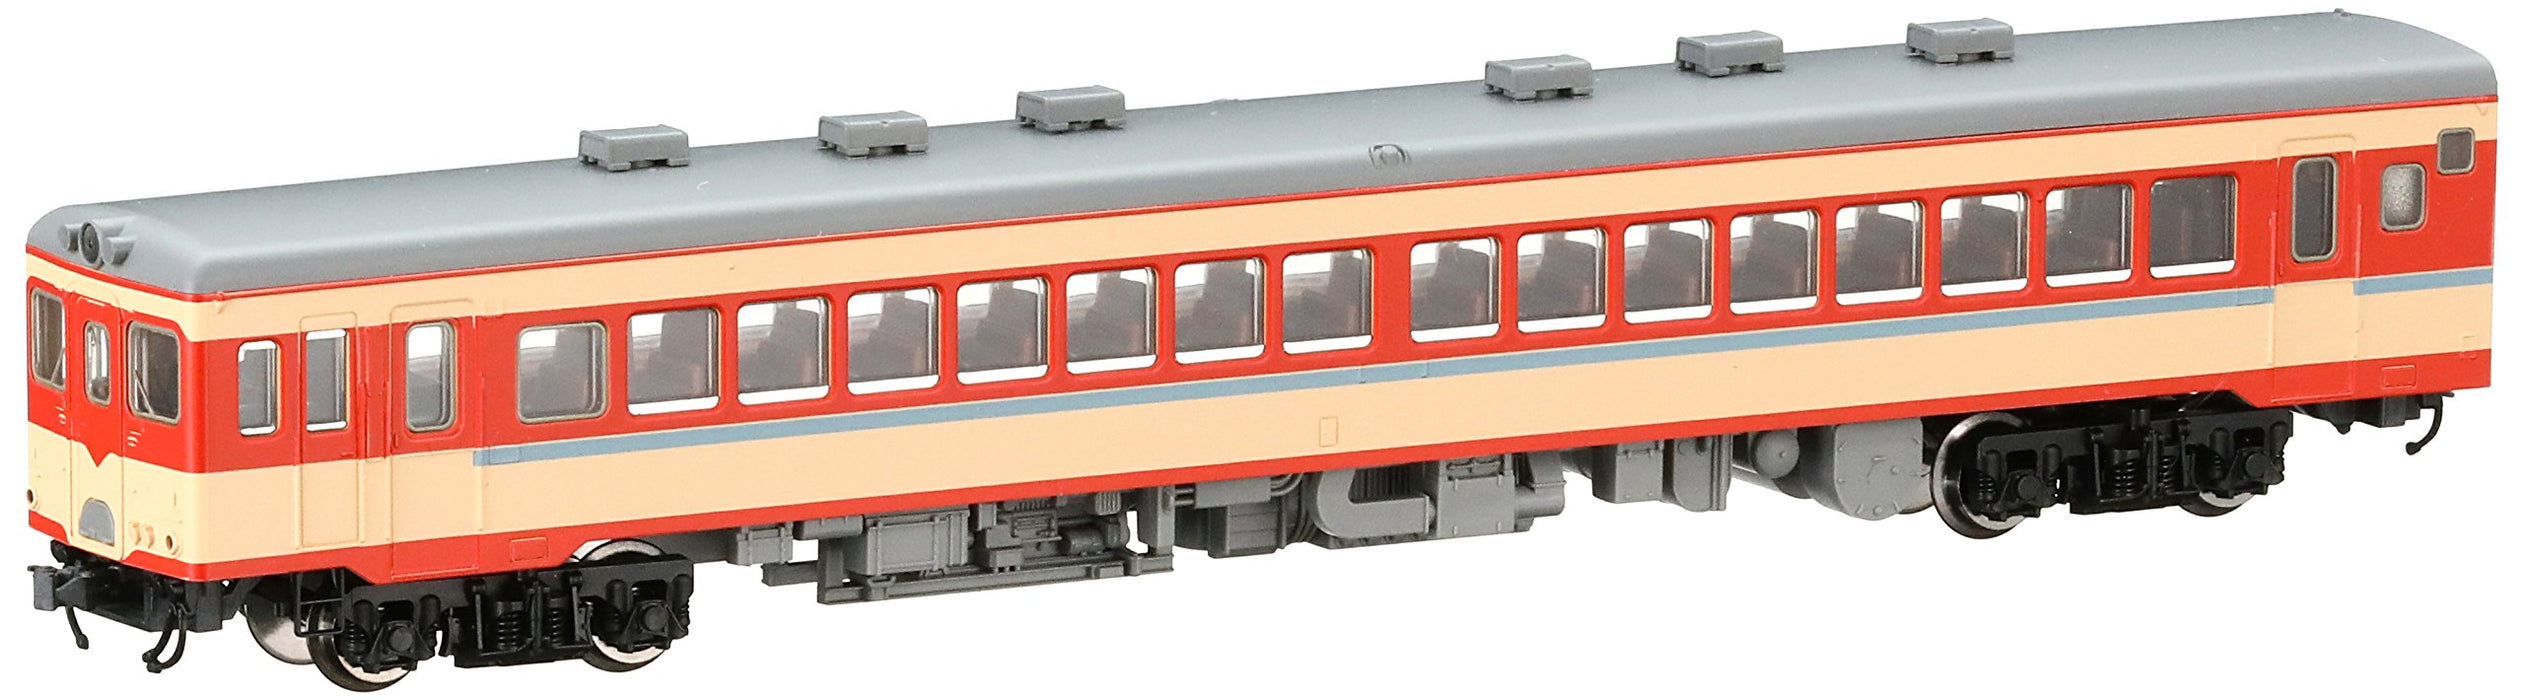 Tomytec Kilo 25 Early Express N Gauge Diesel Railway Model Tomix 8473 Color